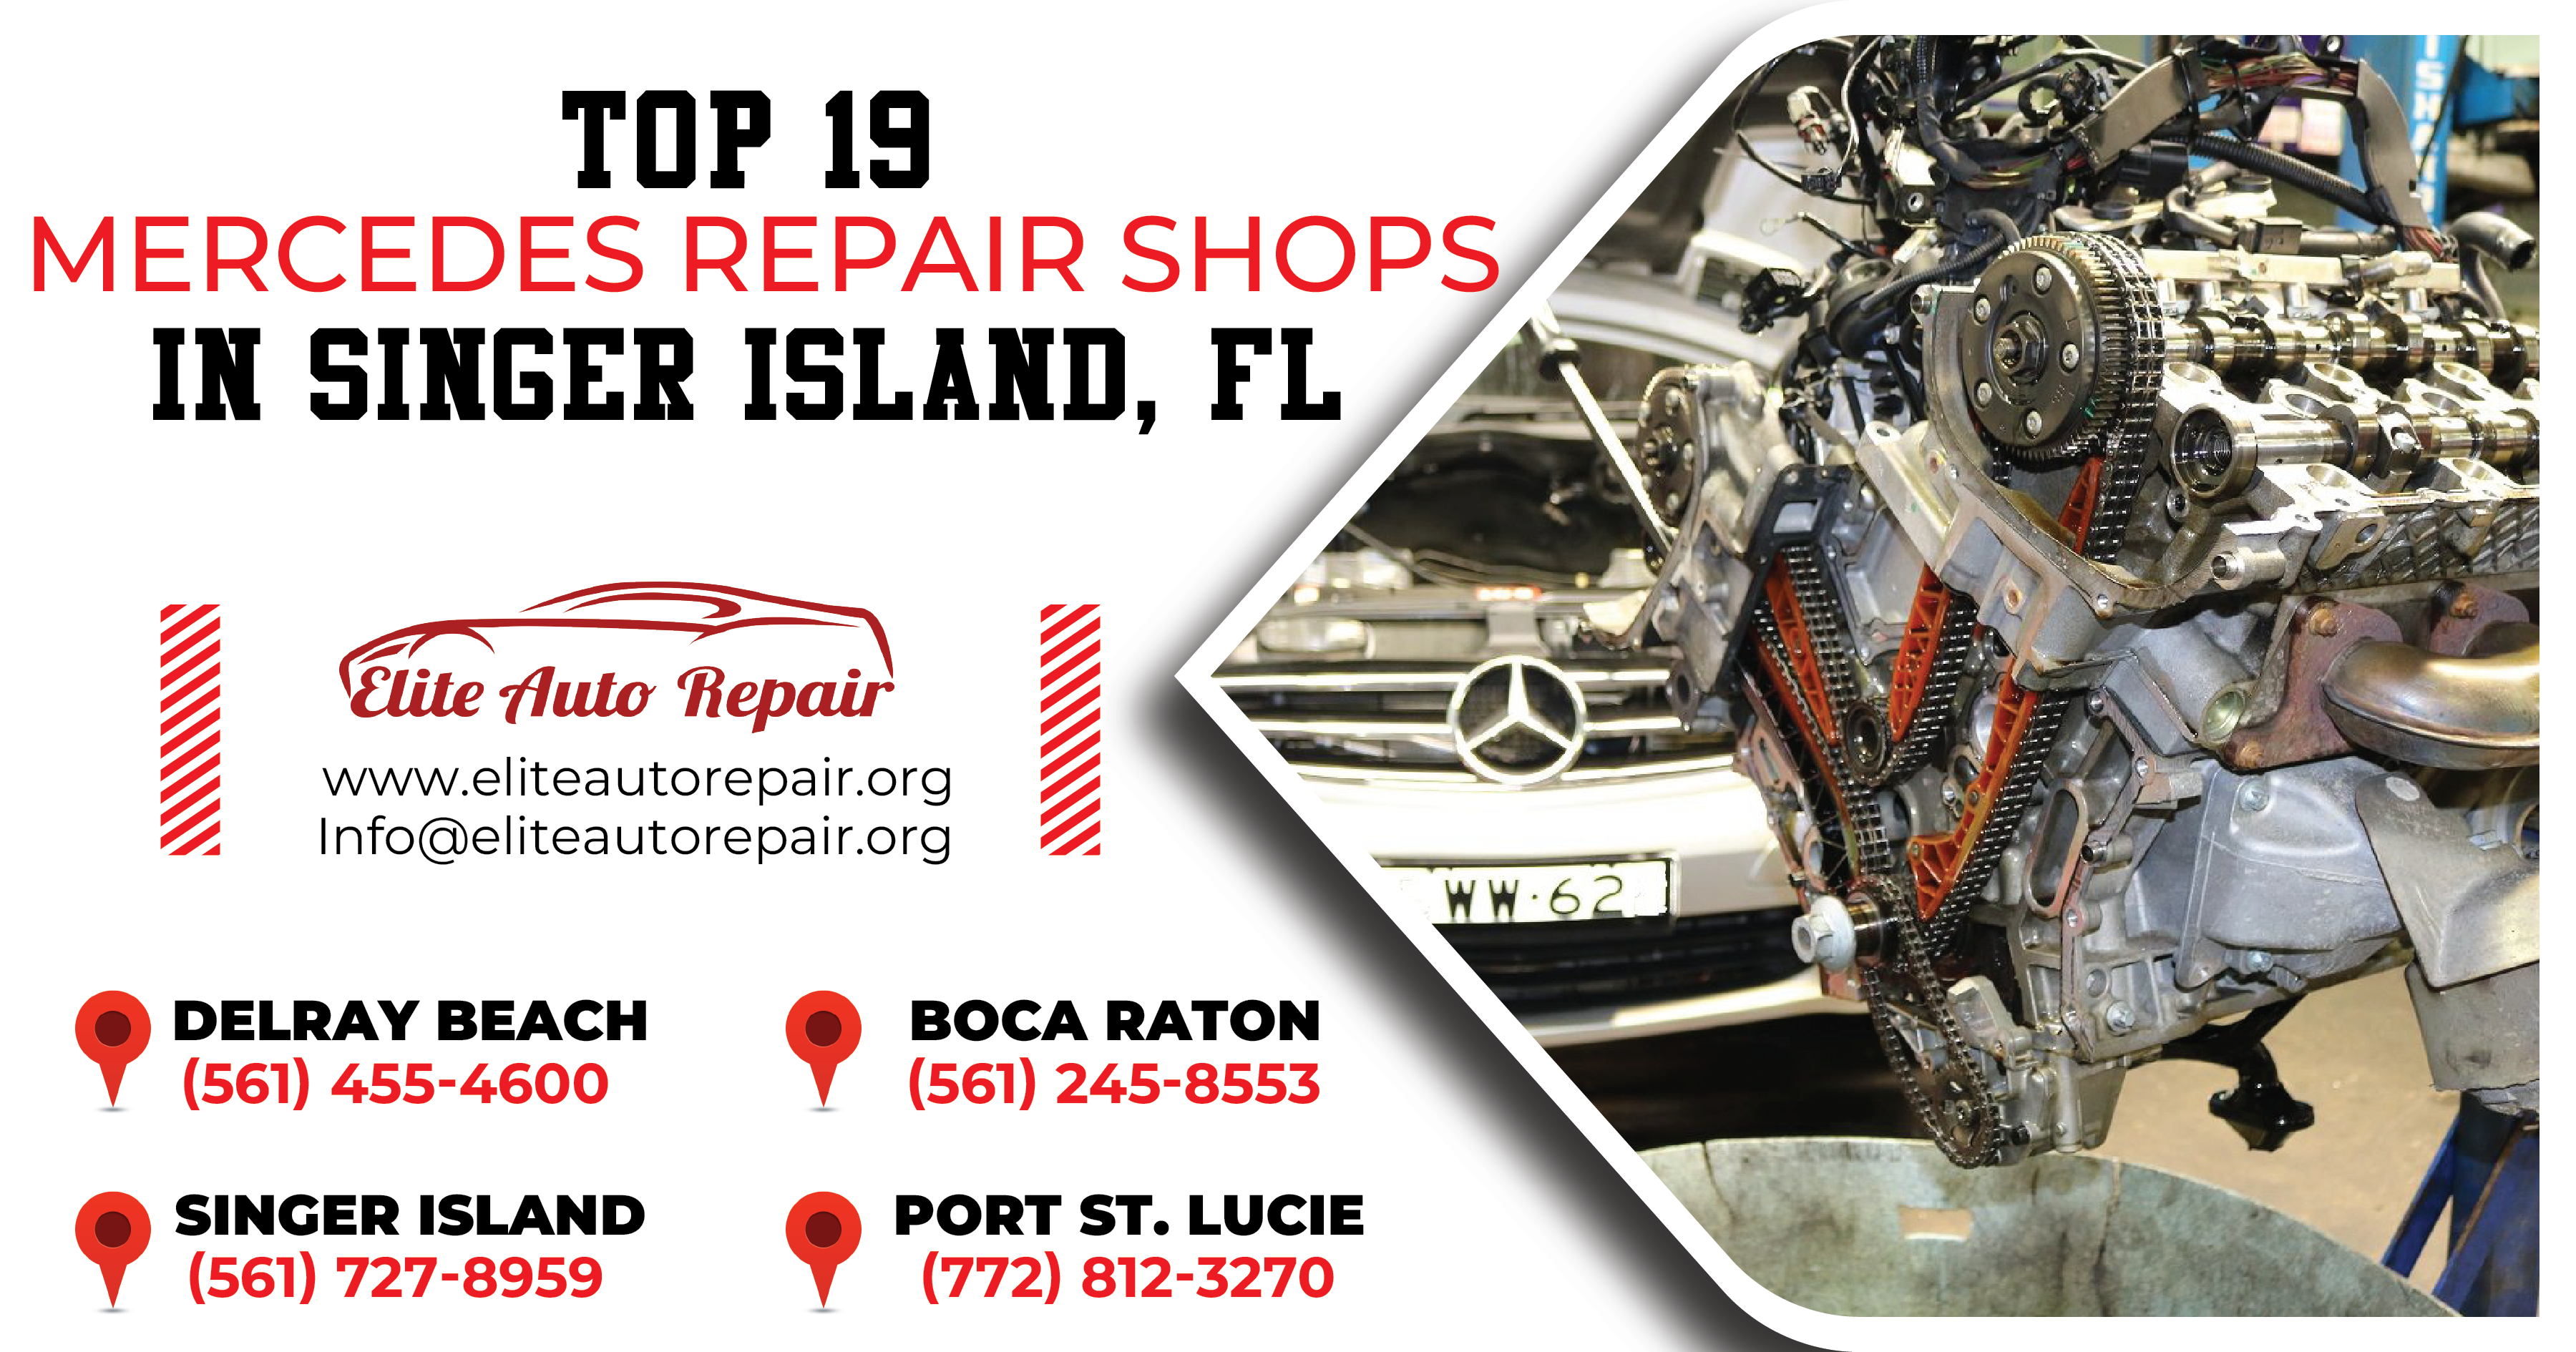 Top 19 Mercedes Repair Shops in Singer Island, FL